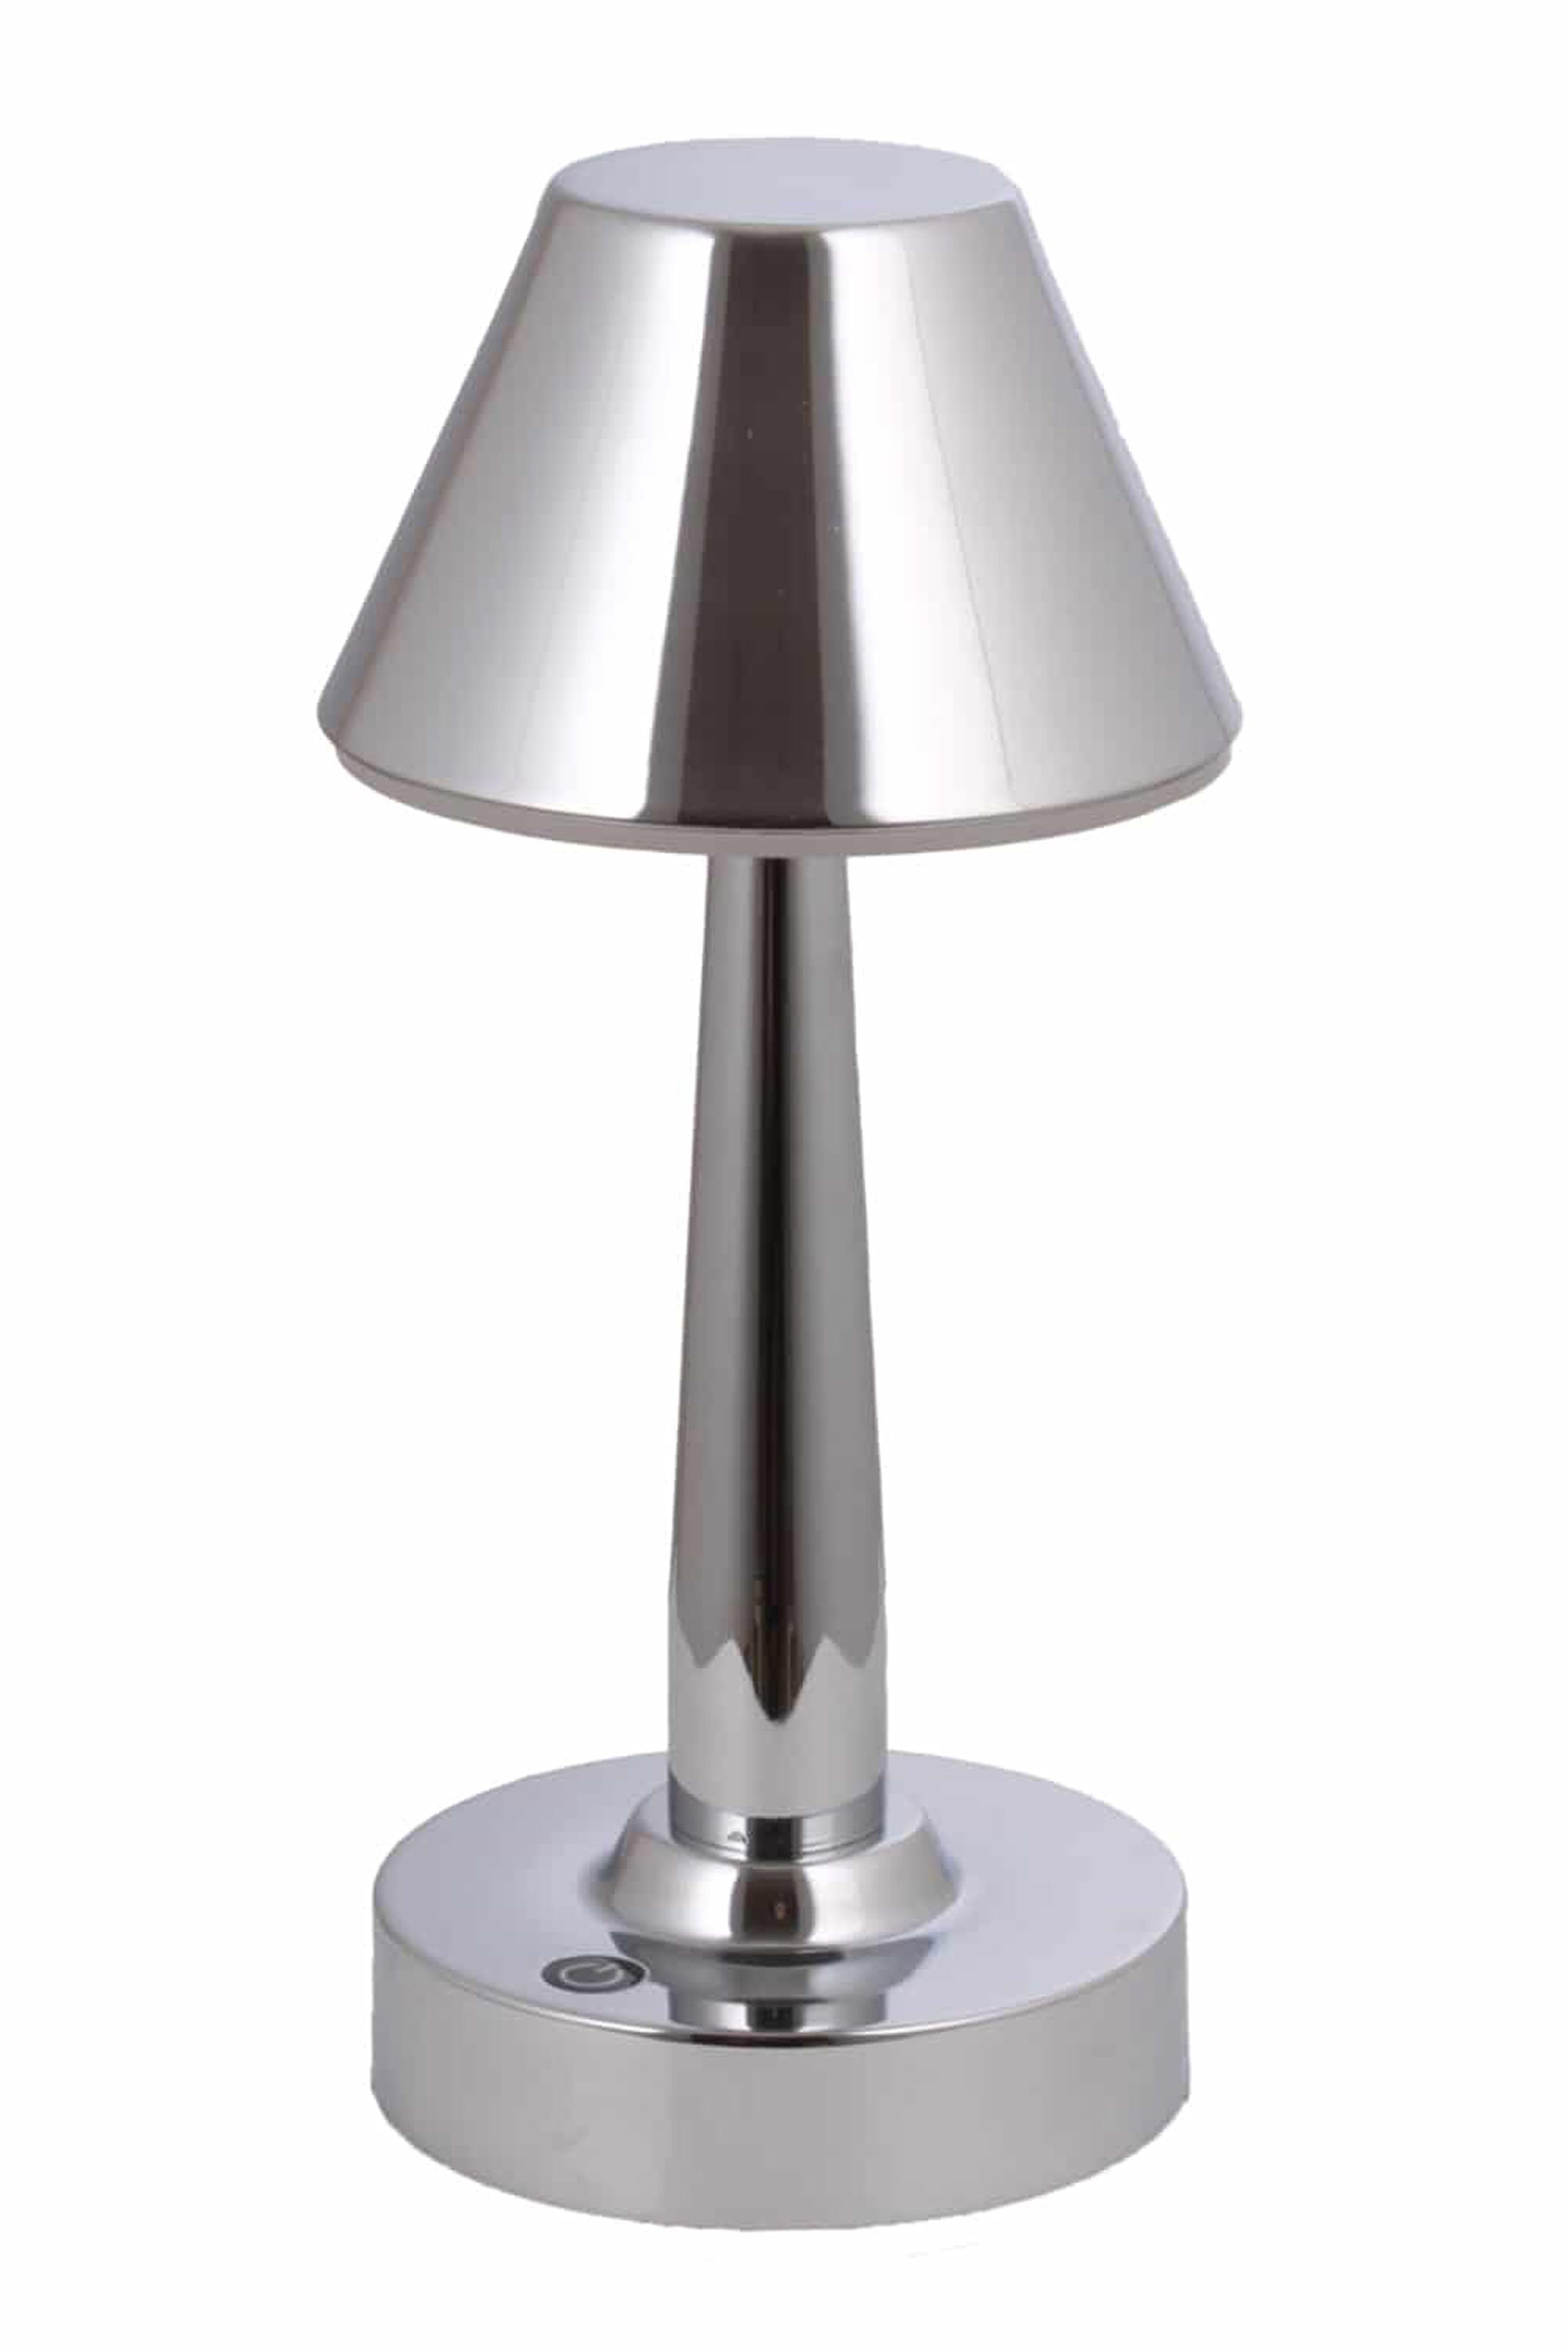 CORDLESS Table Lamp, Portable Light, Vintage Style, Restaurant, Hotel, –  Fame Living